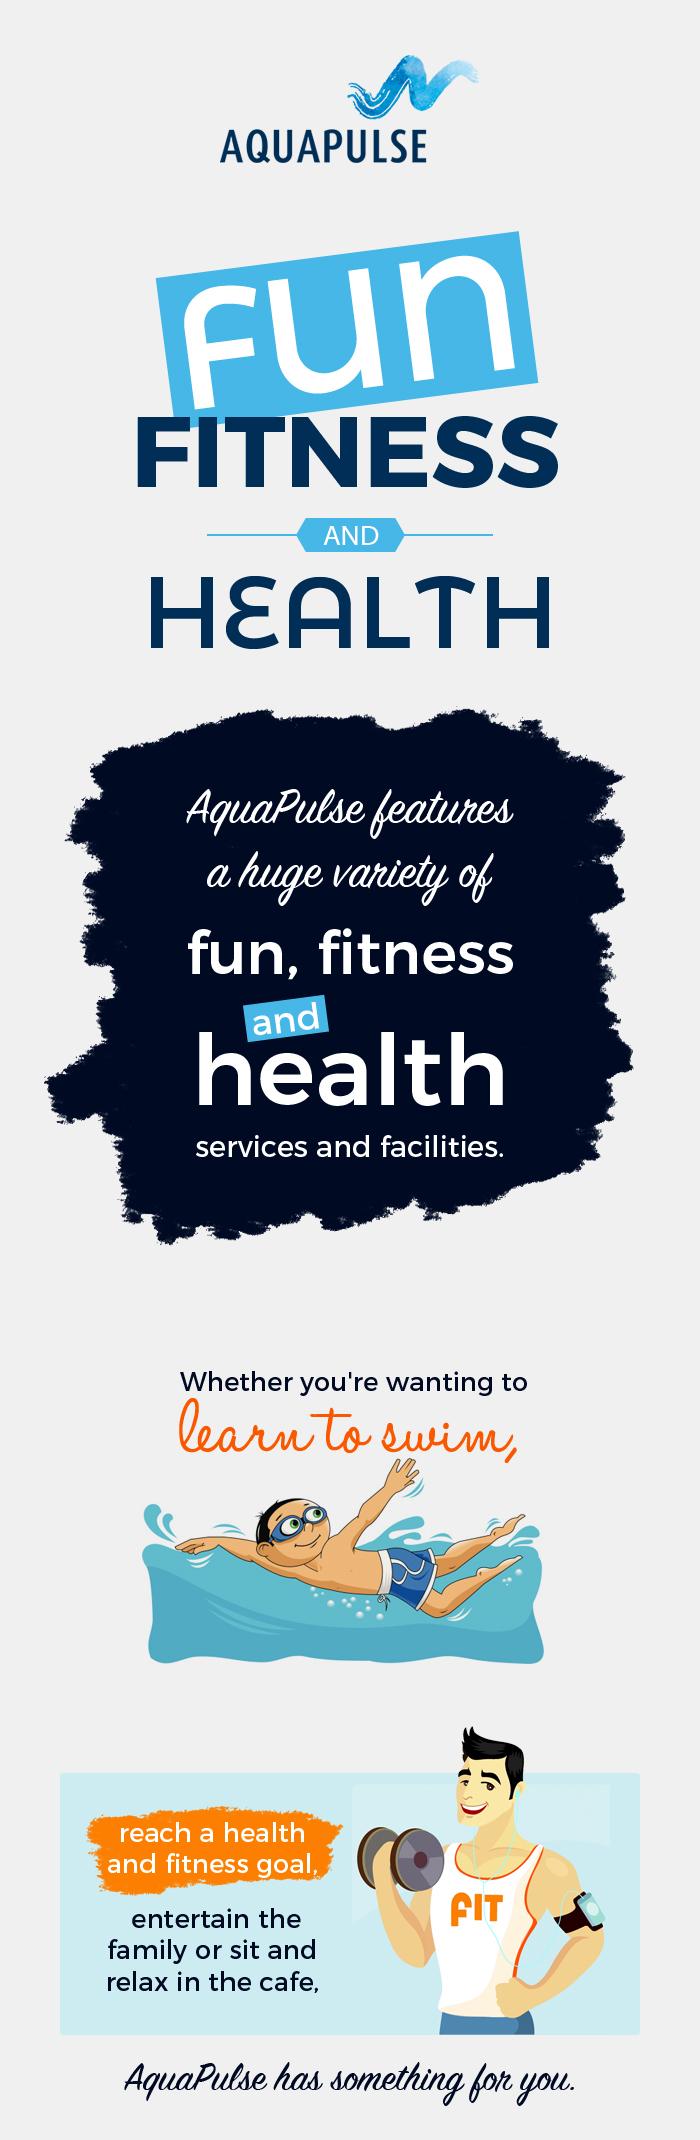 Fun, Fitness and Health Services & Facilities at AquaPulse